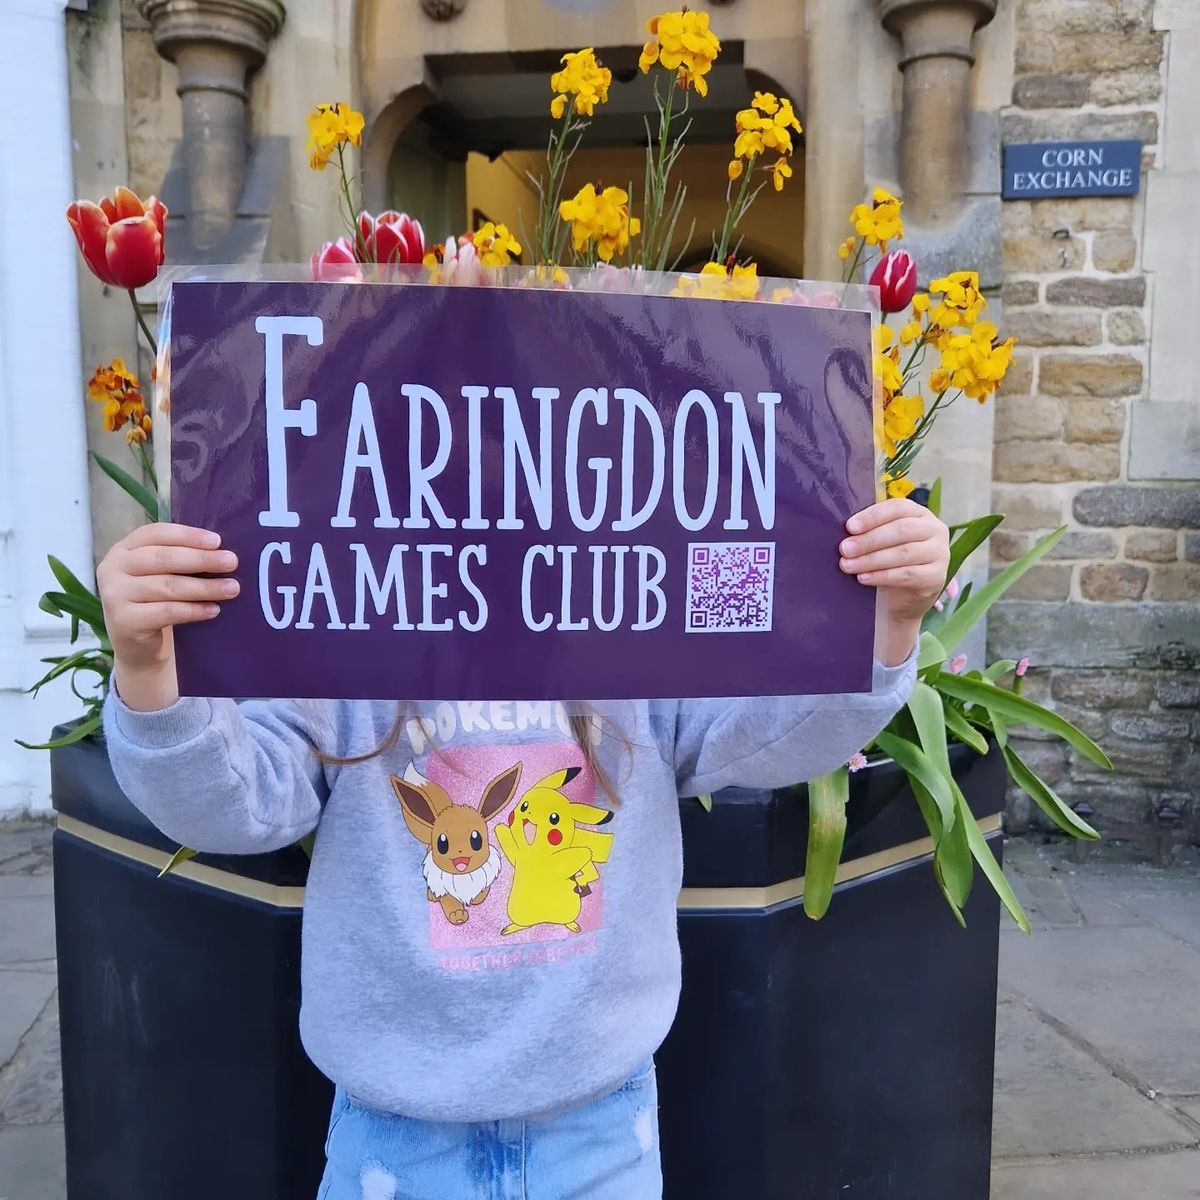 Faringdon Games Club